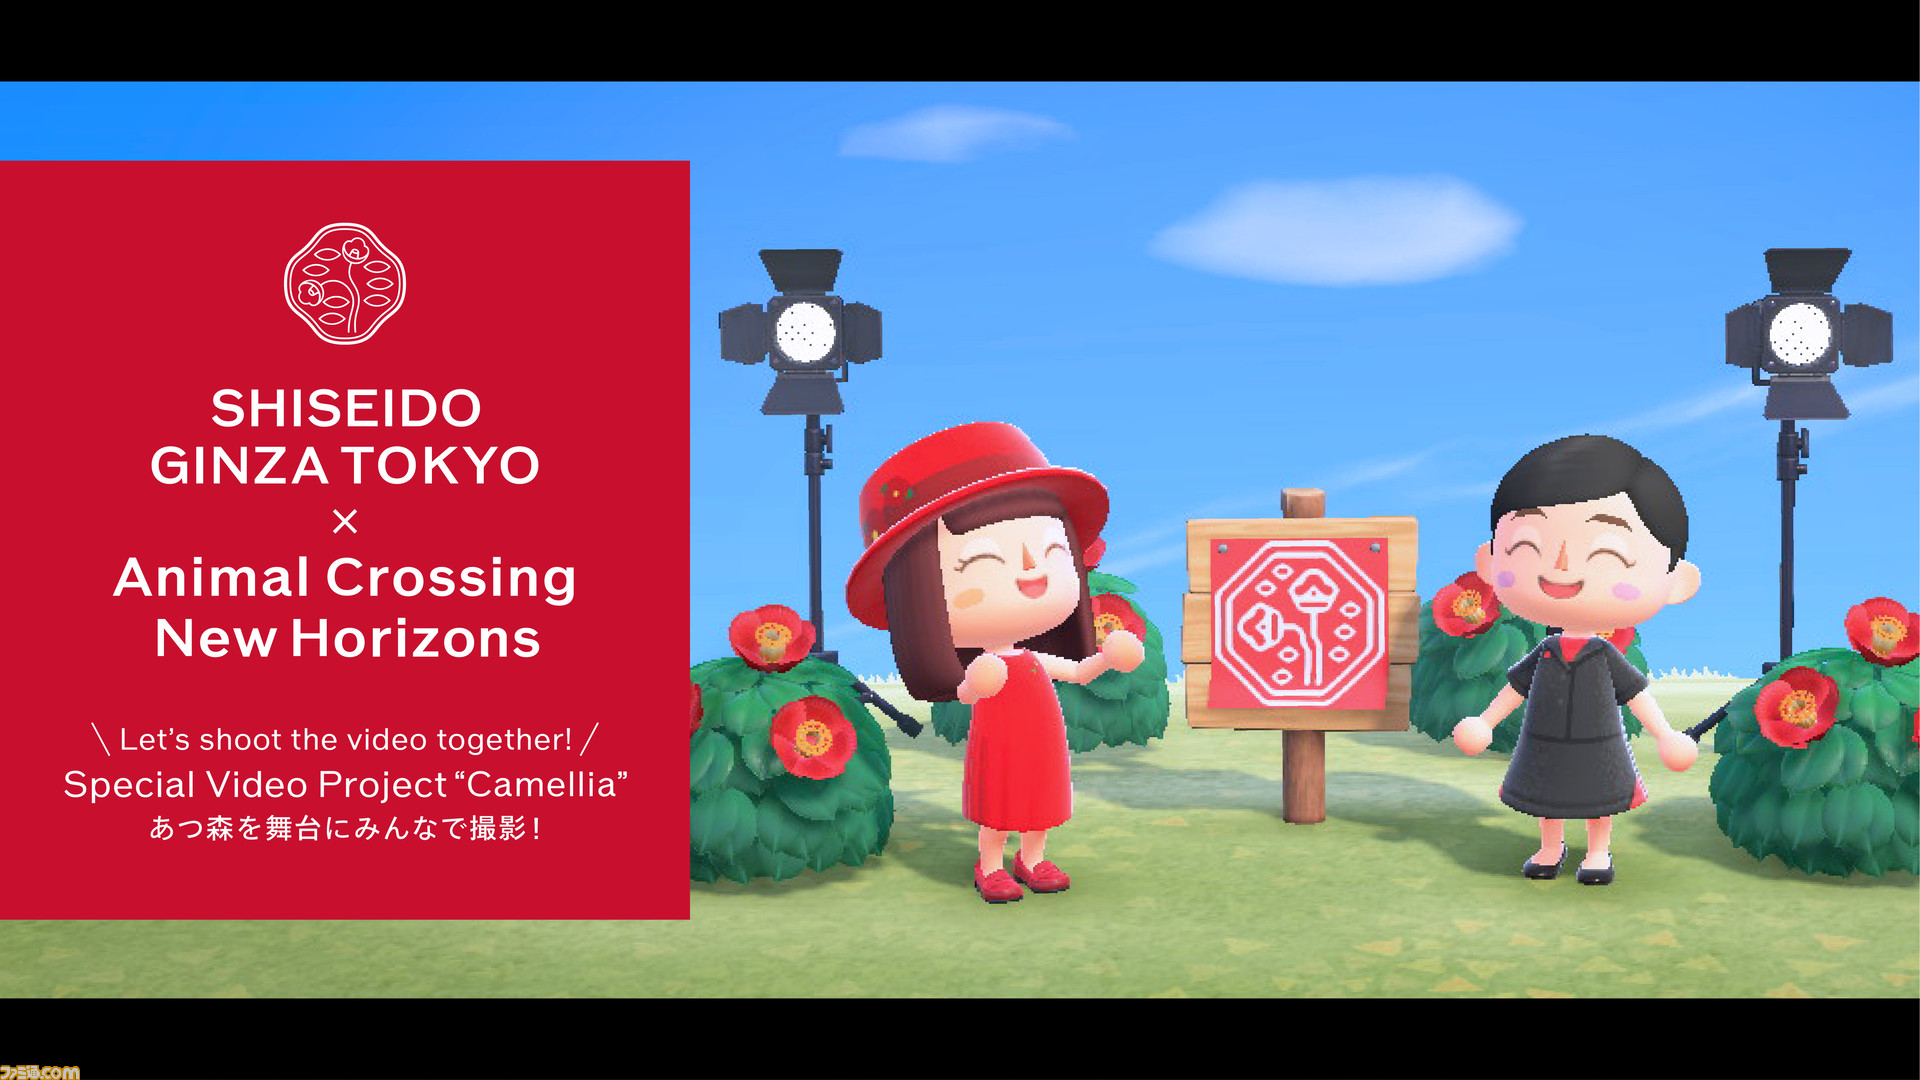 Shiseidoが あつ森 を使用したユーザー参加型動画制作企画を始動 オリジナルマイデザインの配布も ファミ通 Com